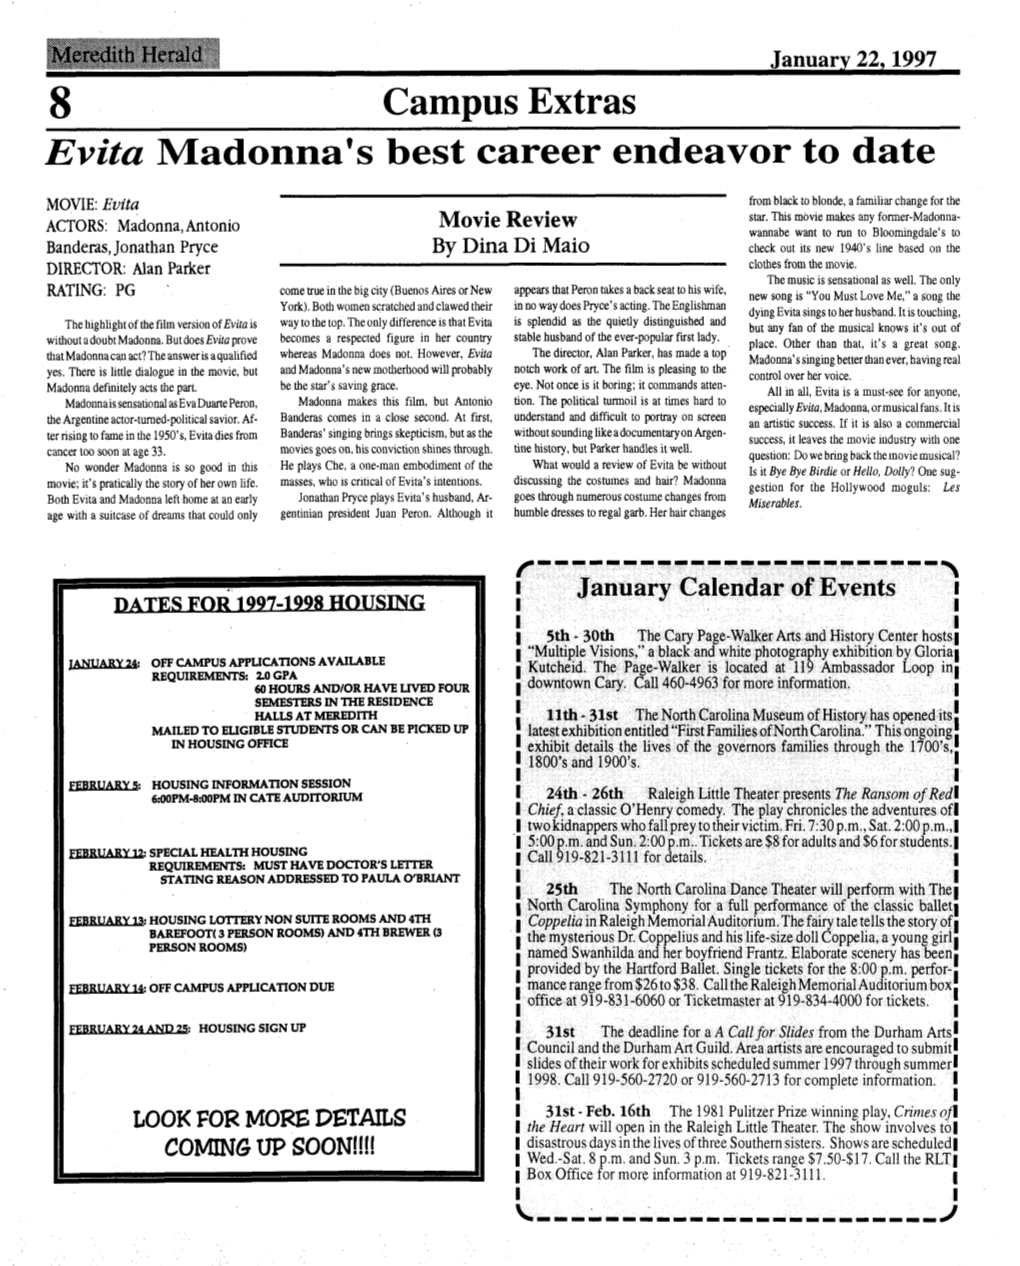 Campus Extras Evita Madonna's Best Career Endeavor to Date